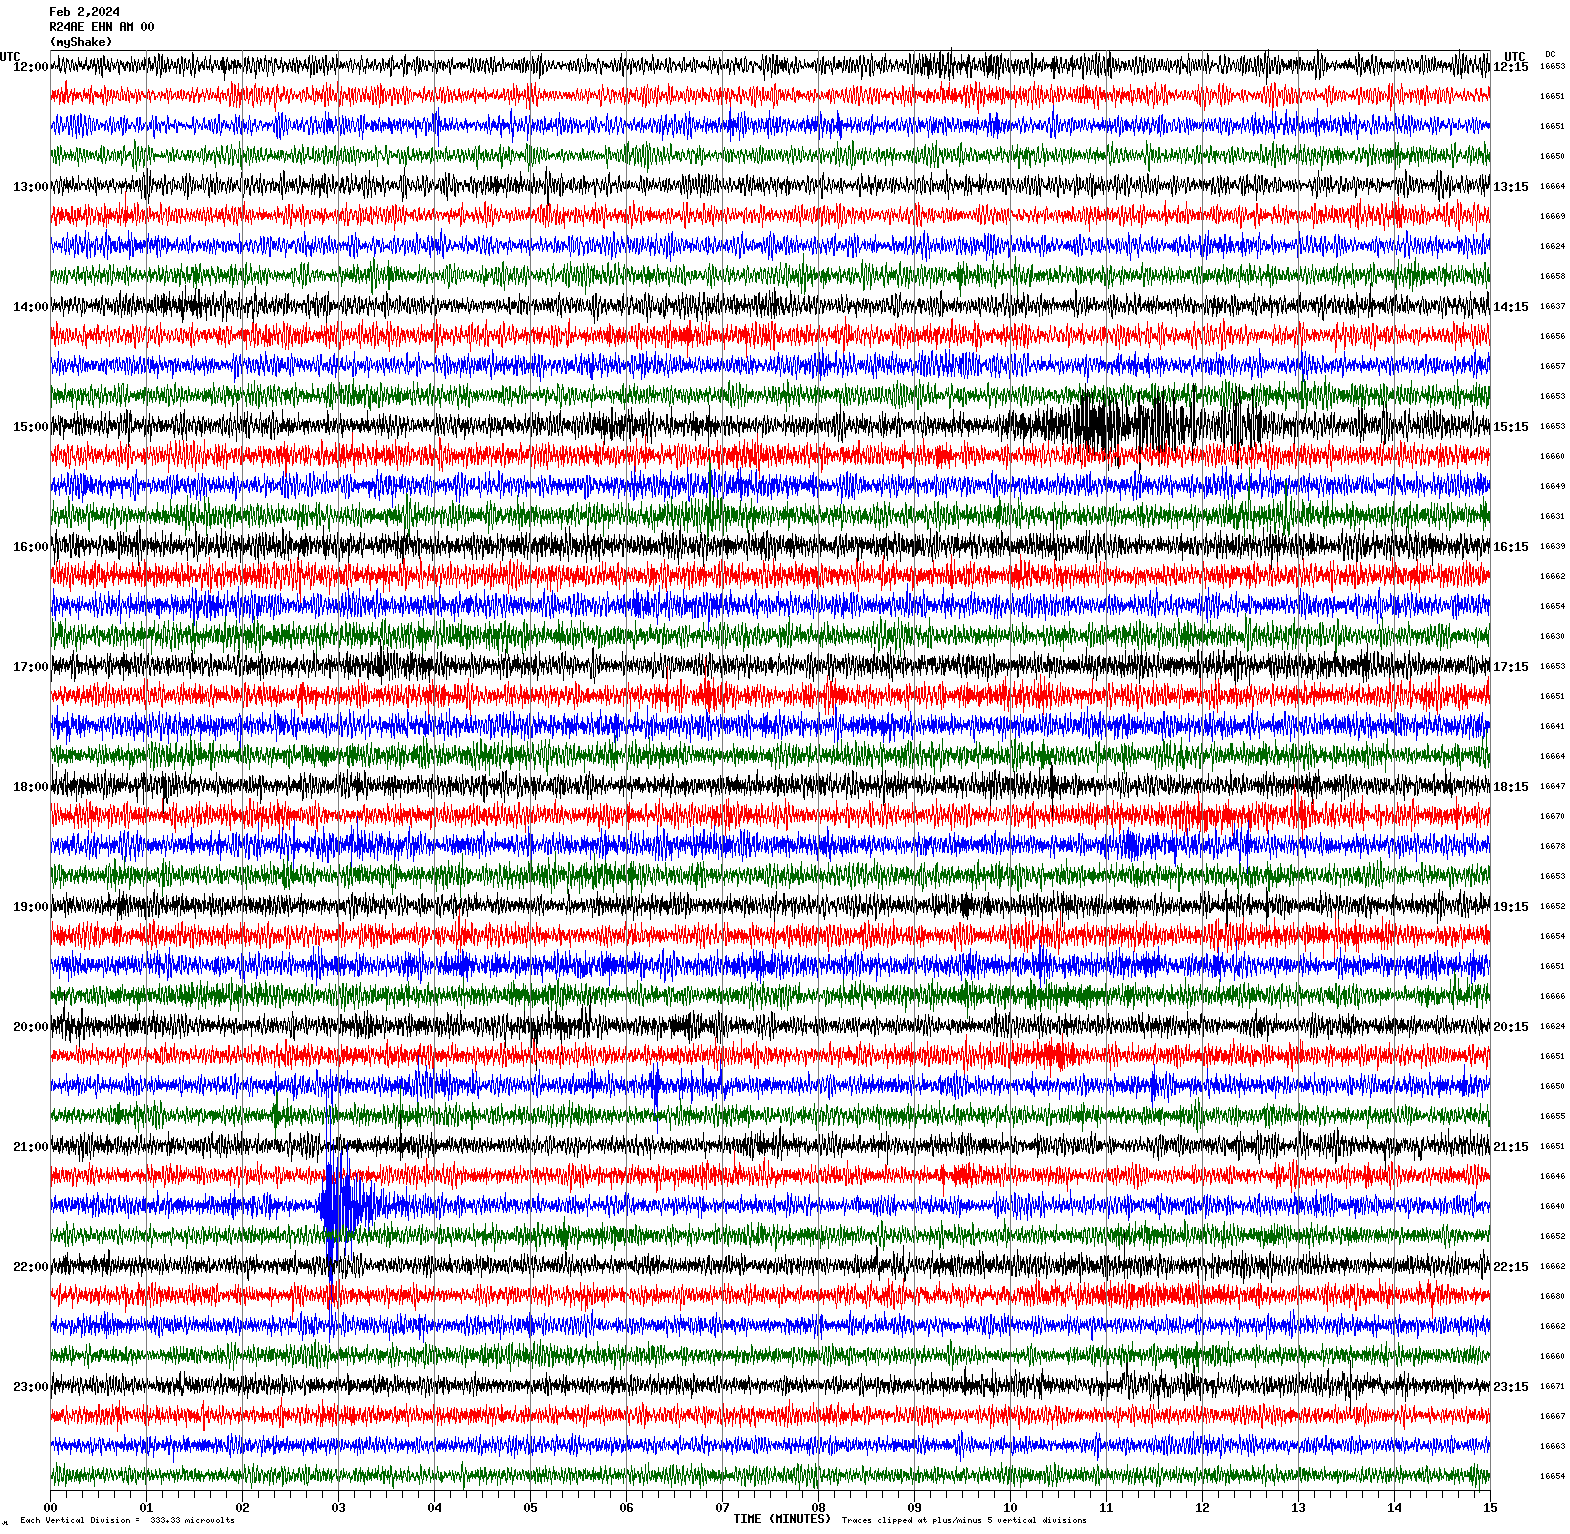 /seismic-data/R24AE/R24AE_EHN_AM_00.2024020212.gif